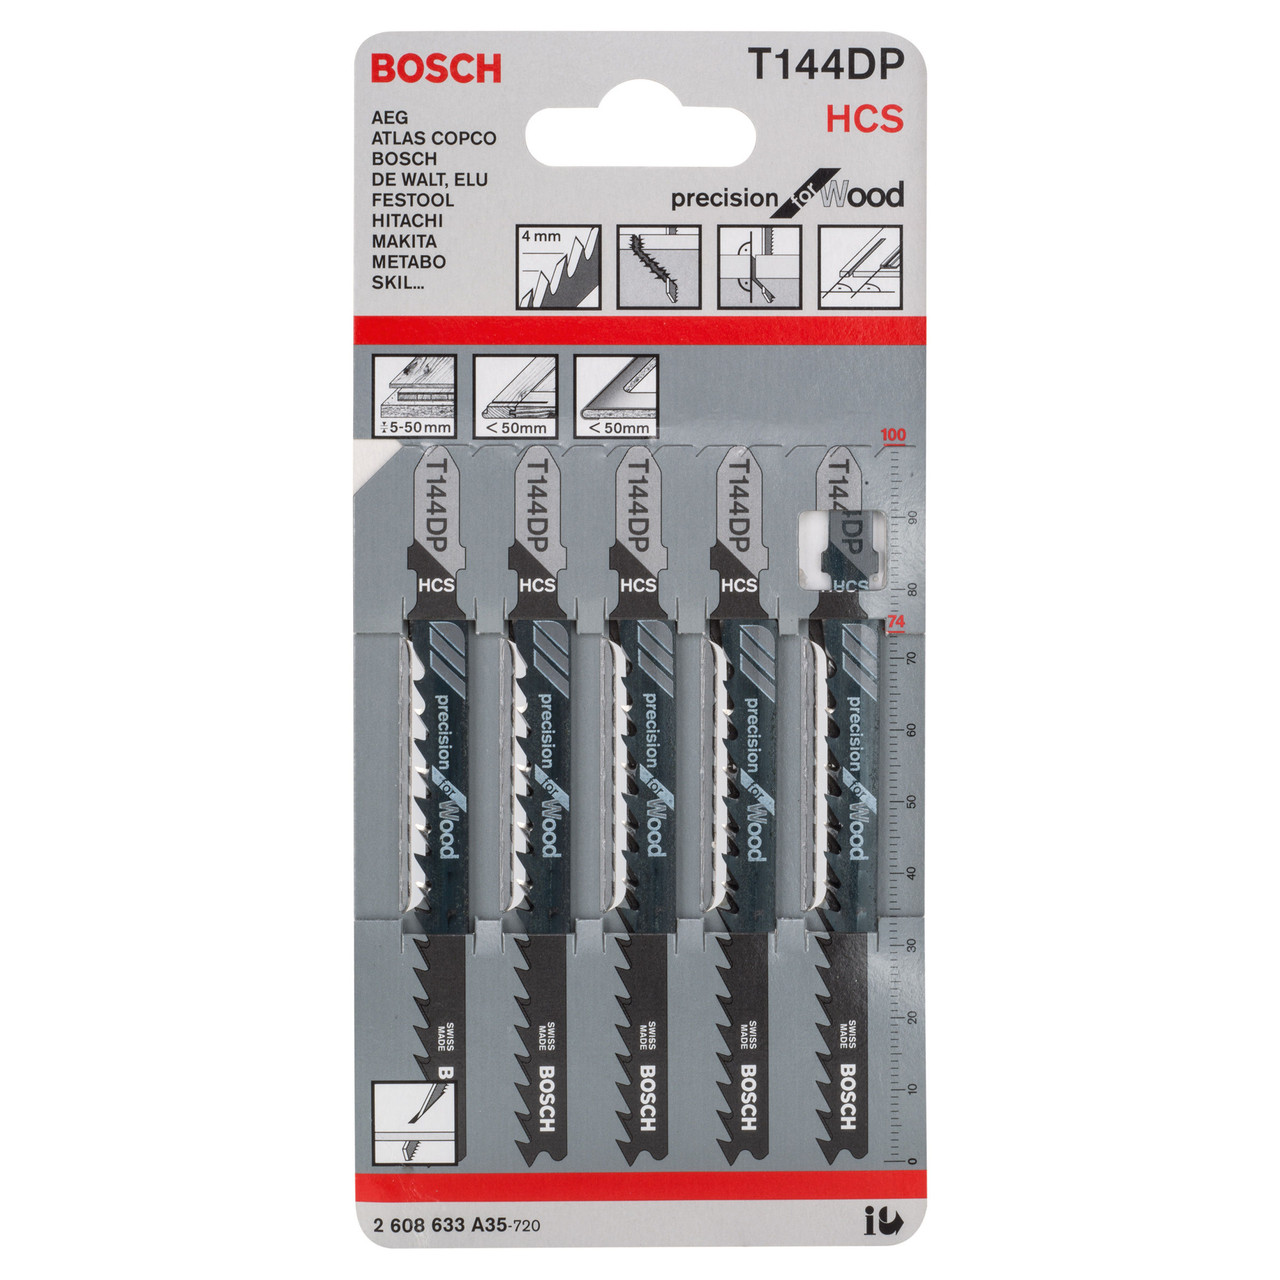 Photos - Chain / Reciprocating Saw Blade Bosch T144DP  Jigsaw Blades - For Wood (5 Piece) 2608633A35 (2608633A35)